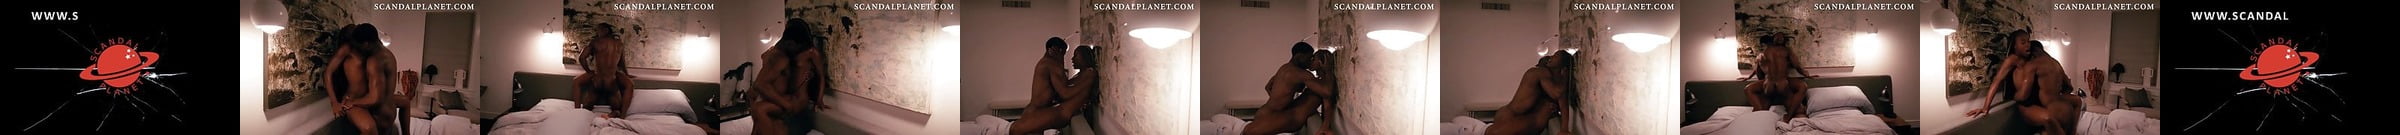 Brenda Bakke Naked Sex Scene On Scandalplanet Com Porn A8 Pl